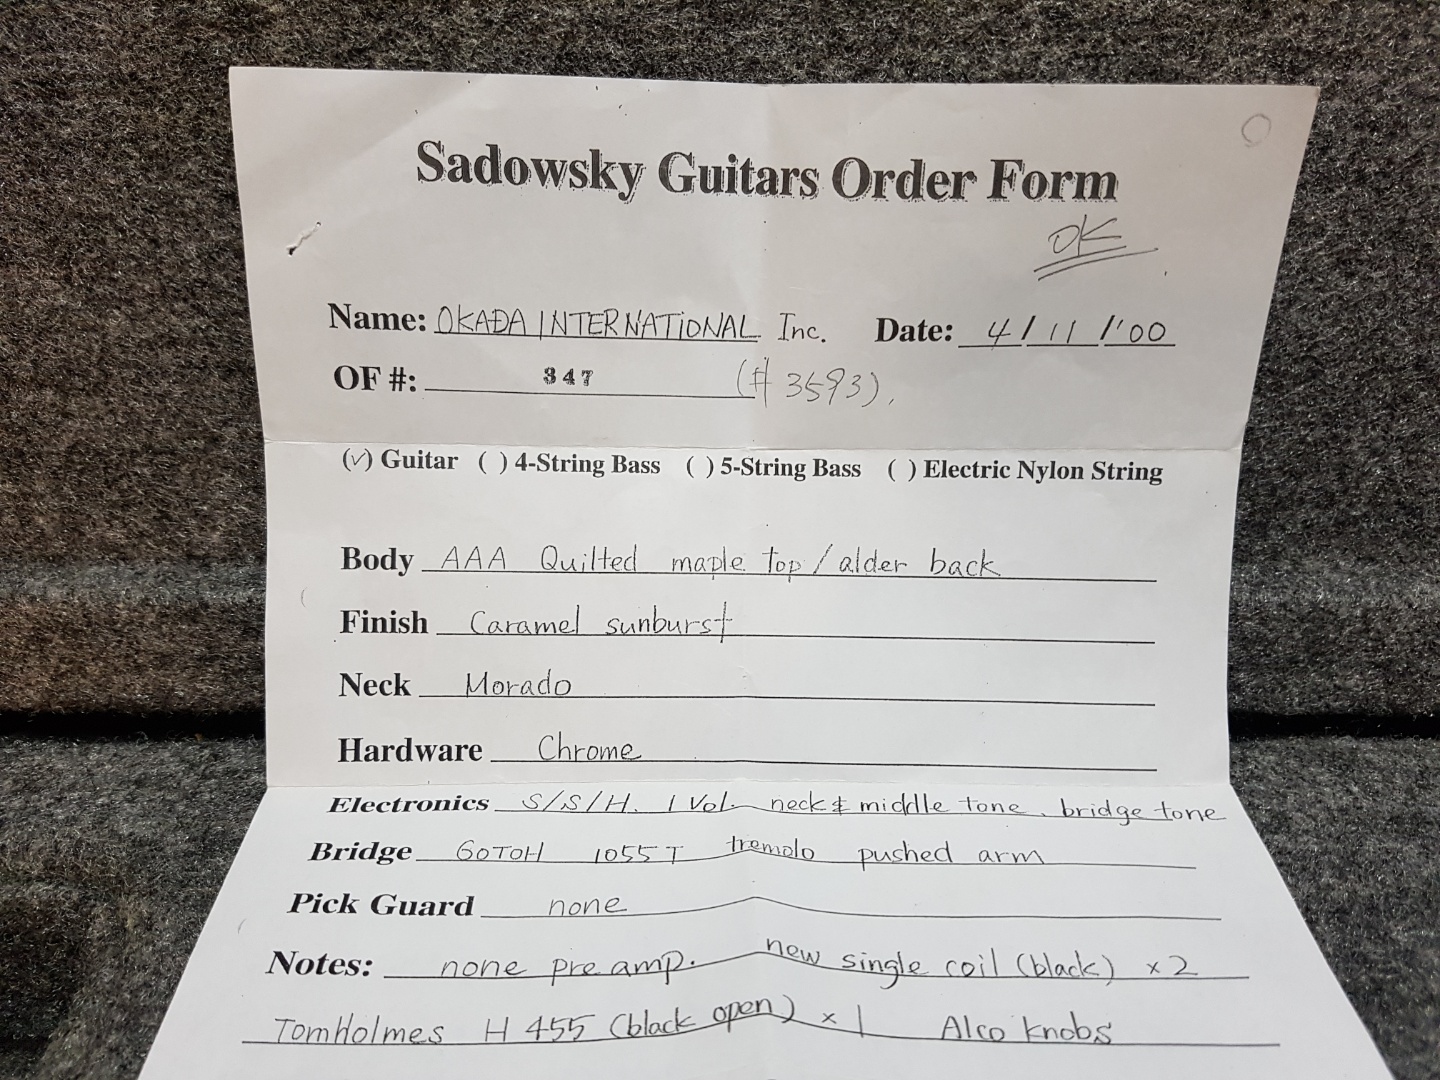 2000 Sadowsky NYC Custom Order 